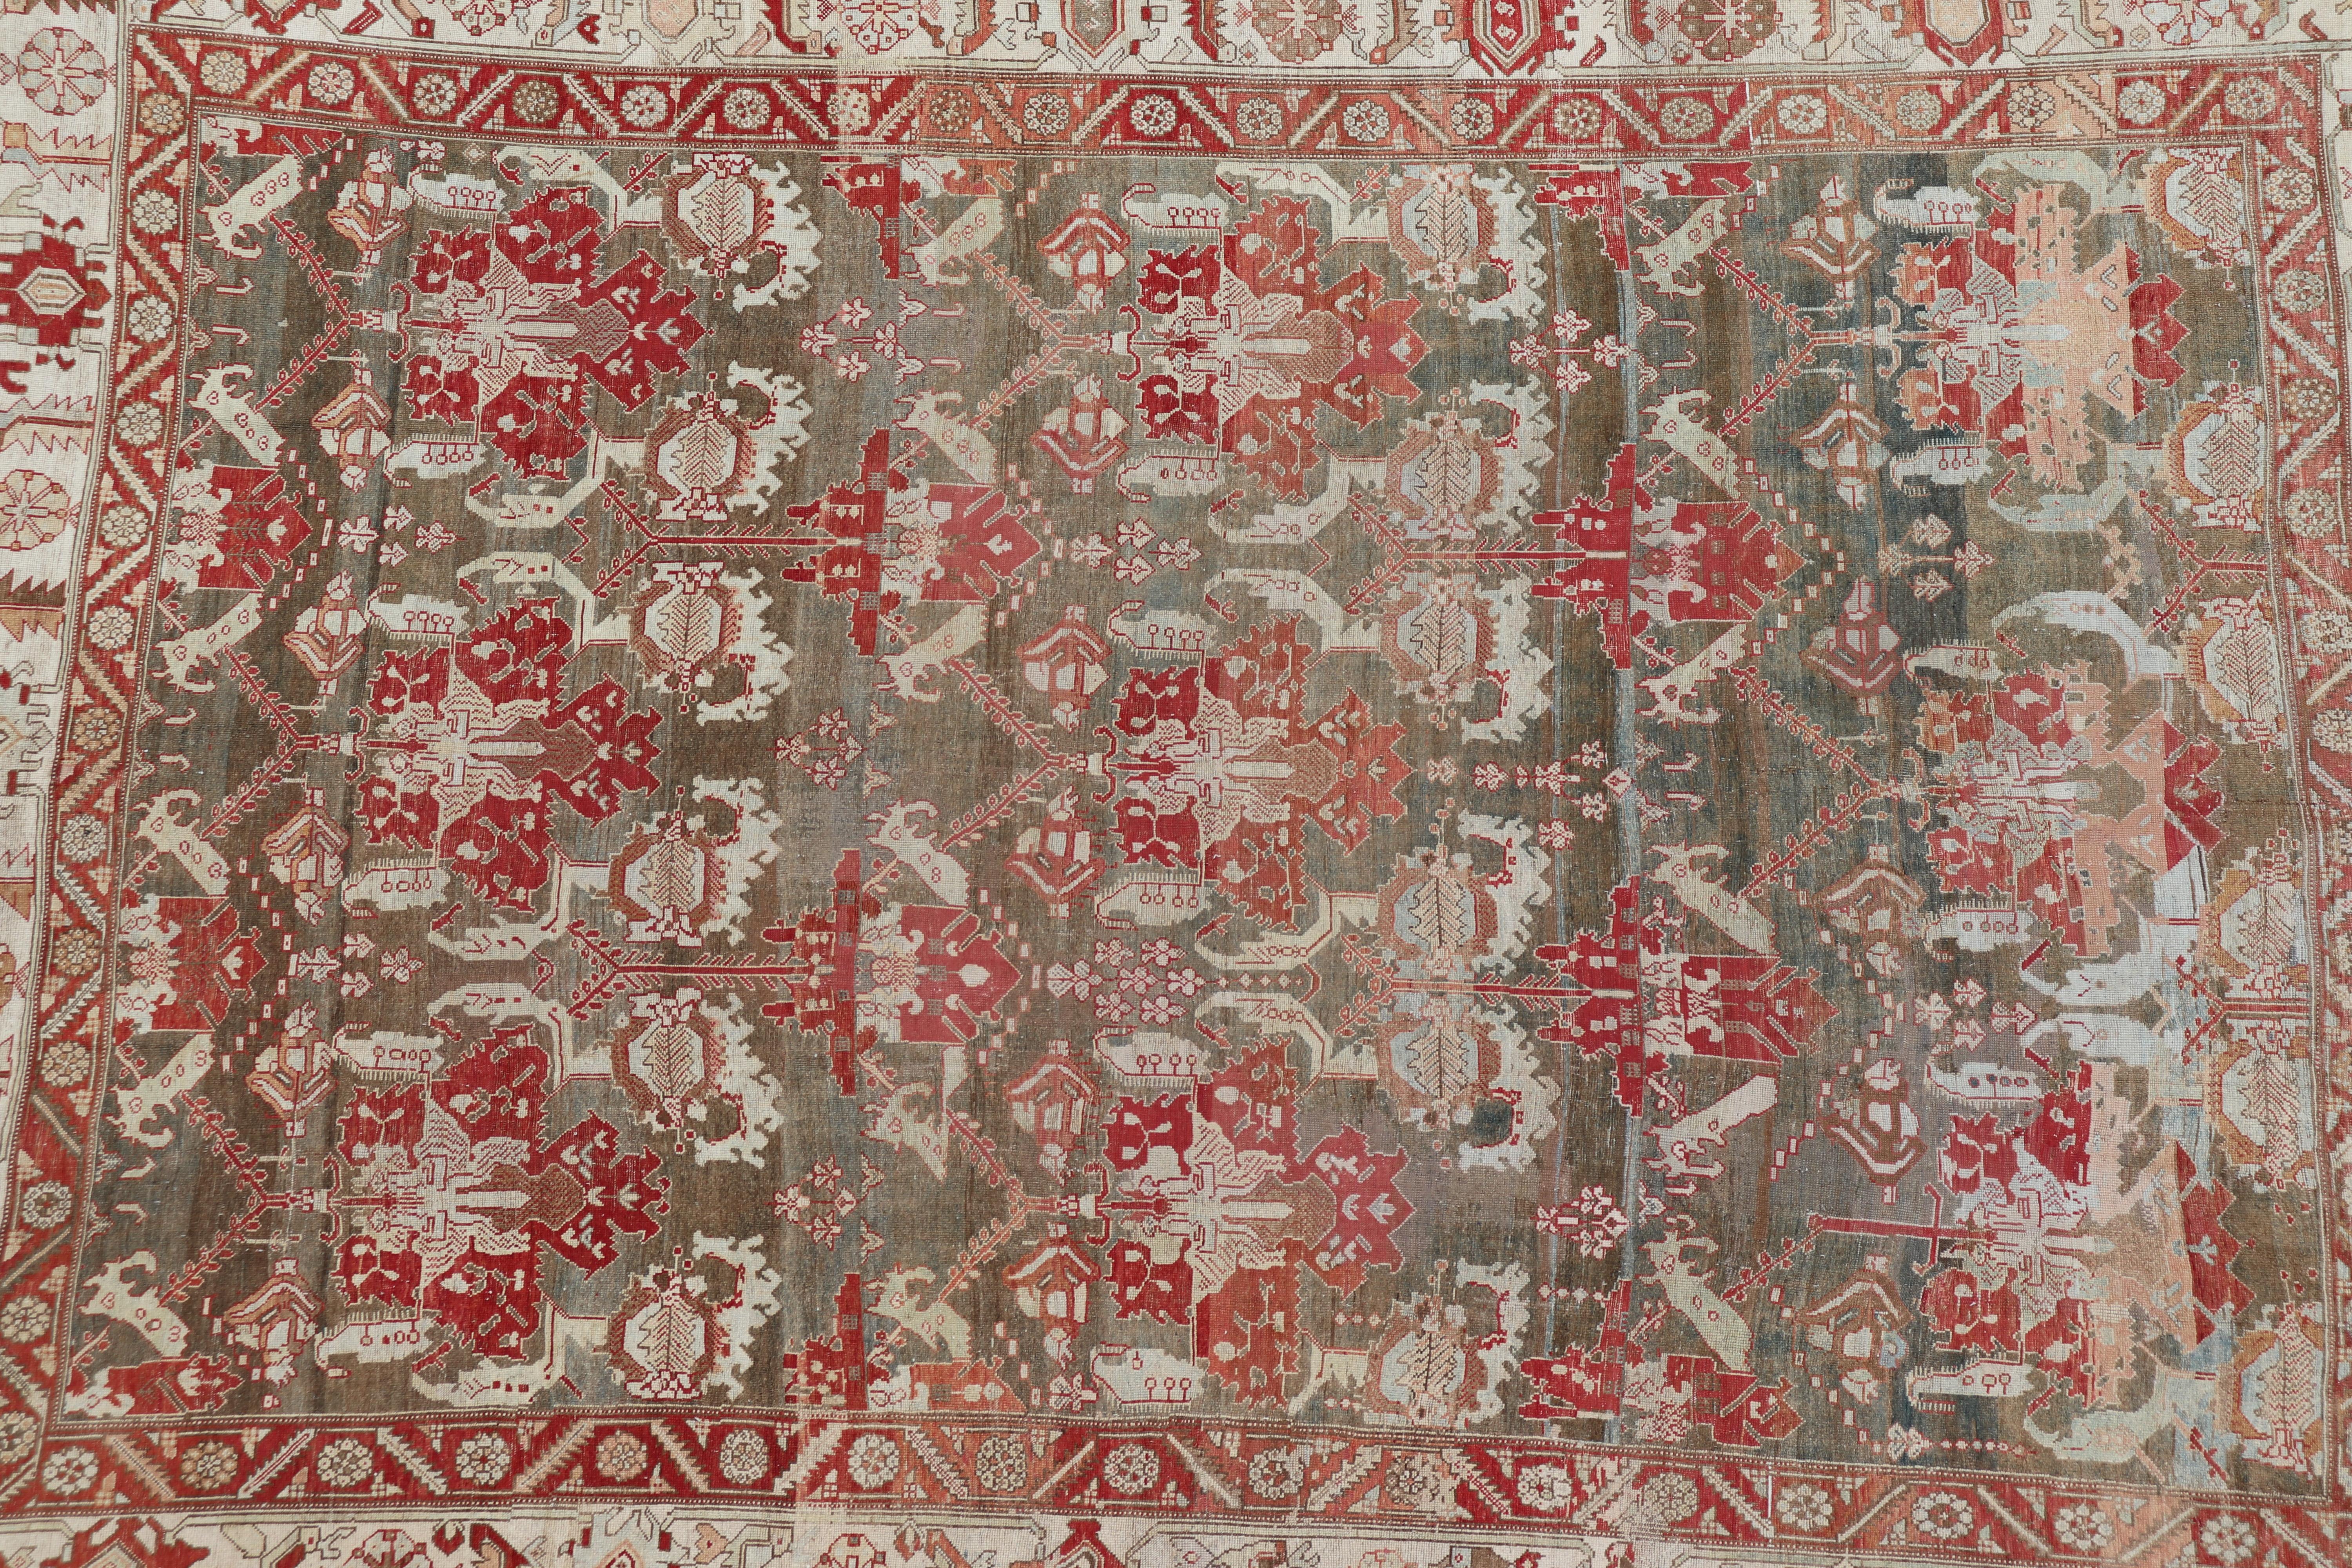 Antique Persian Large Scale Tribal Design Bakhtiari Rug in Multi Colors For Sale 9